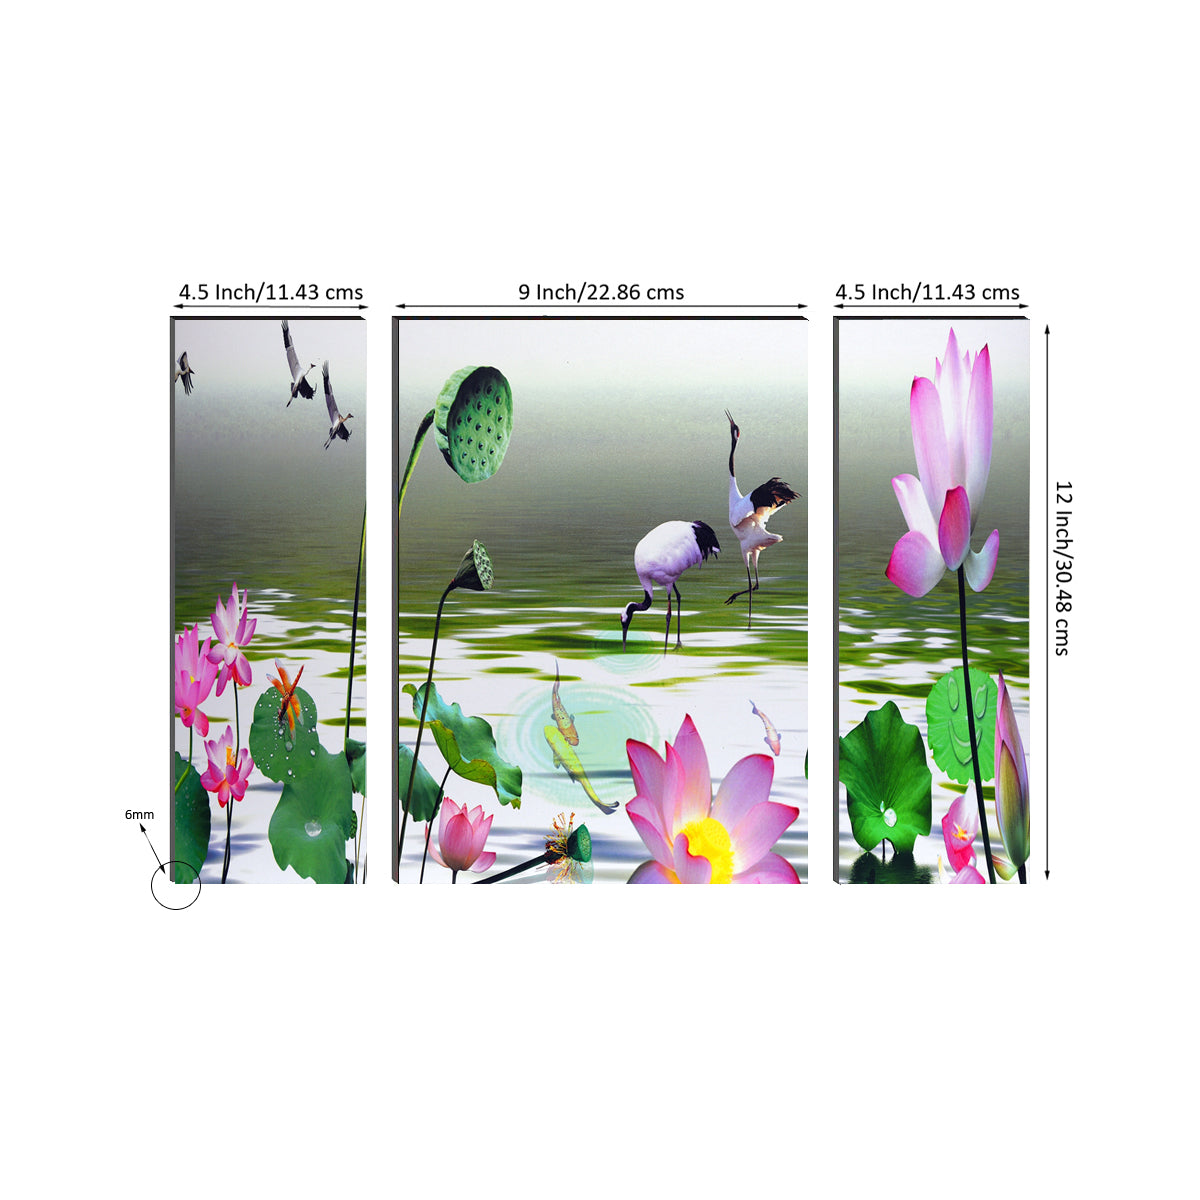 6MM MDF Set of 3 Botanical Floral Satin Matt Texture UV Art Painting 2